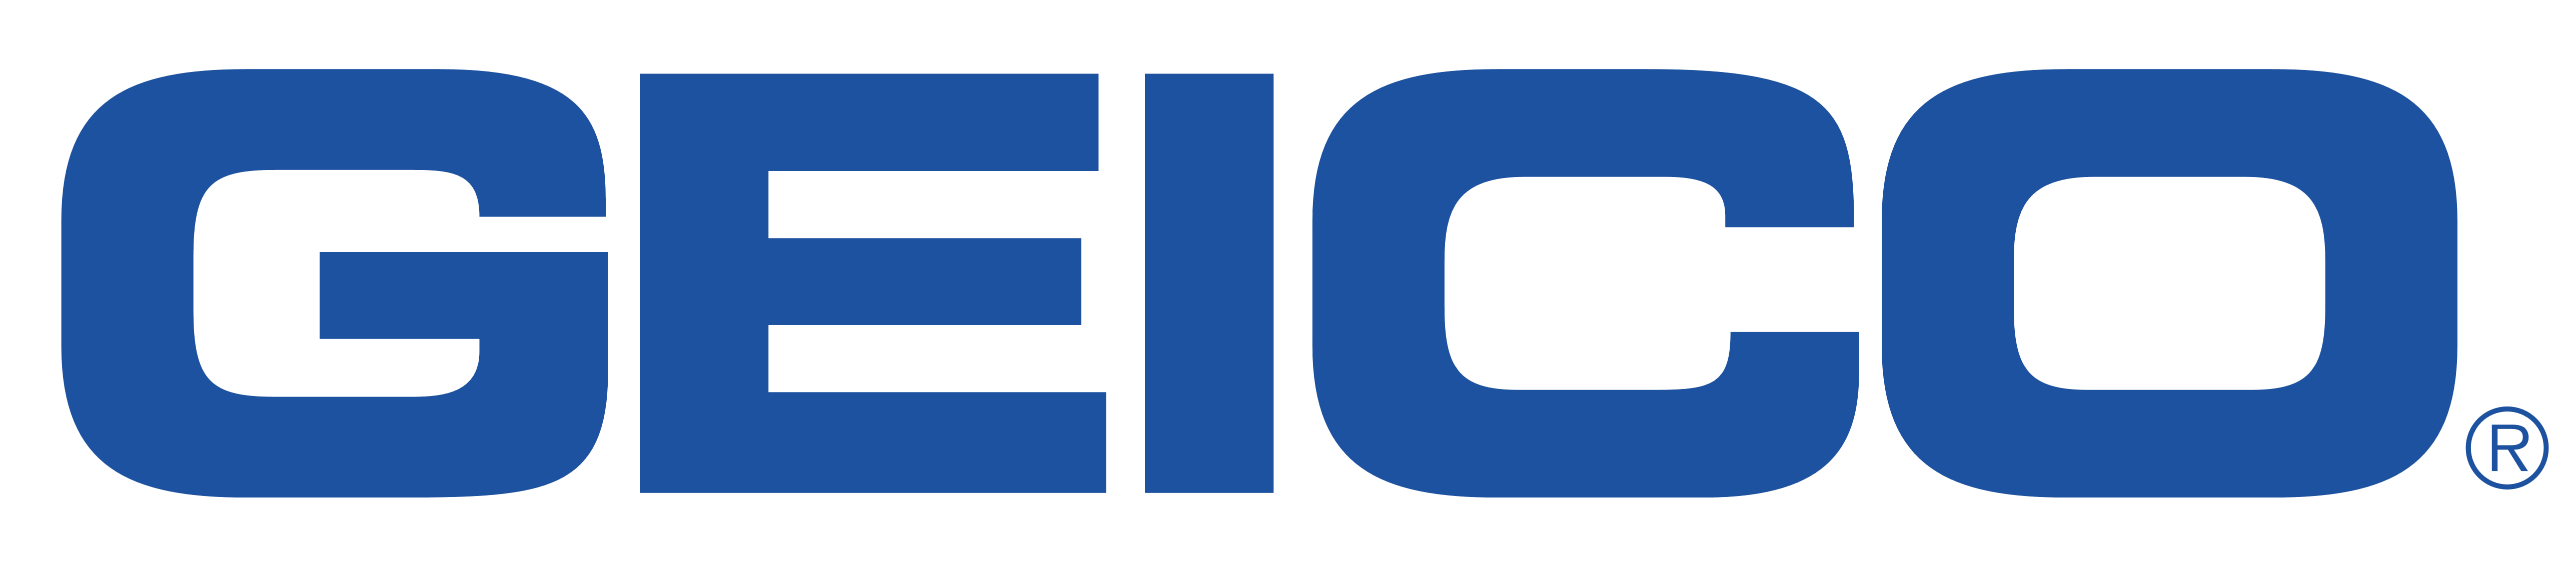 GEICO Small Logo - Geico